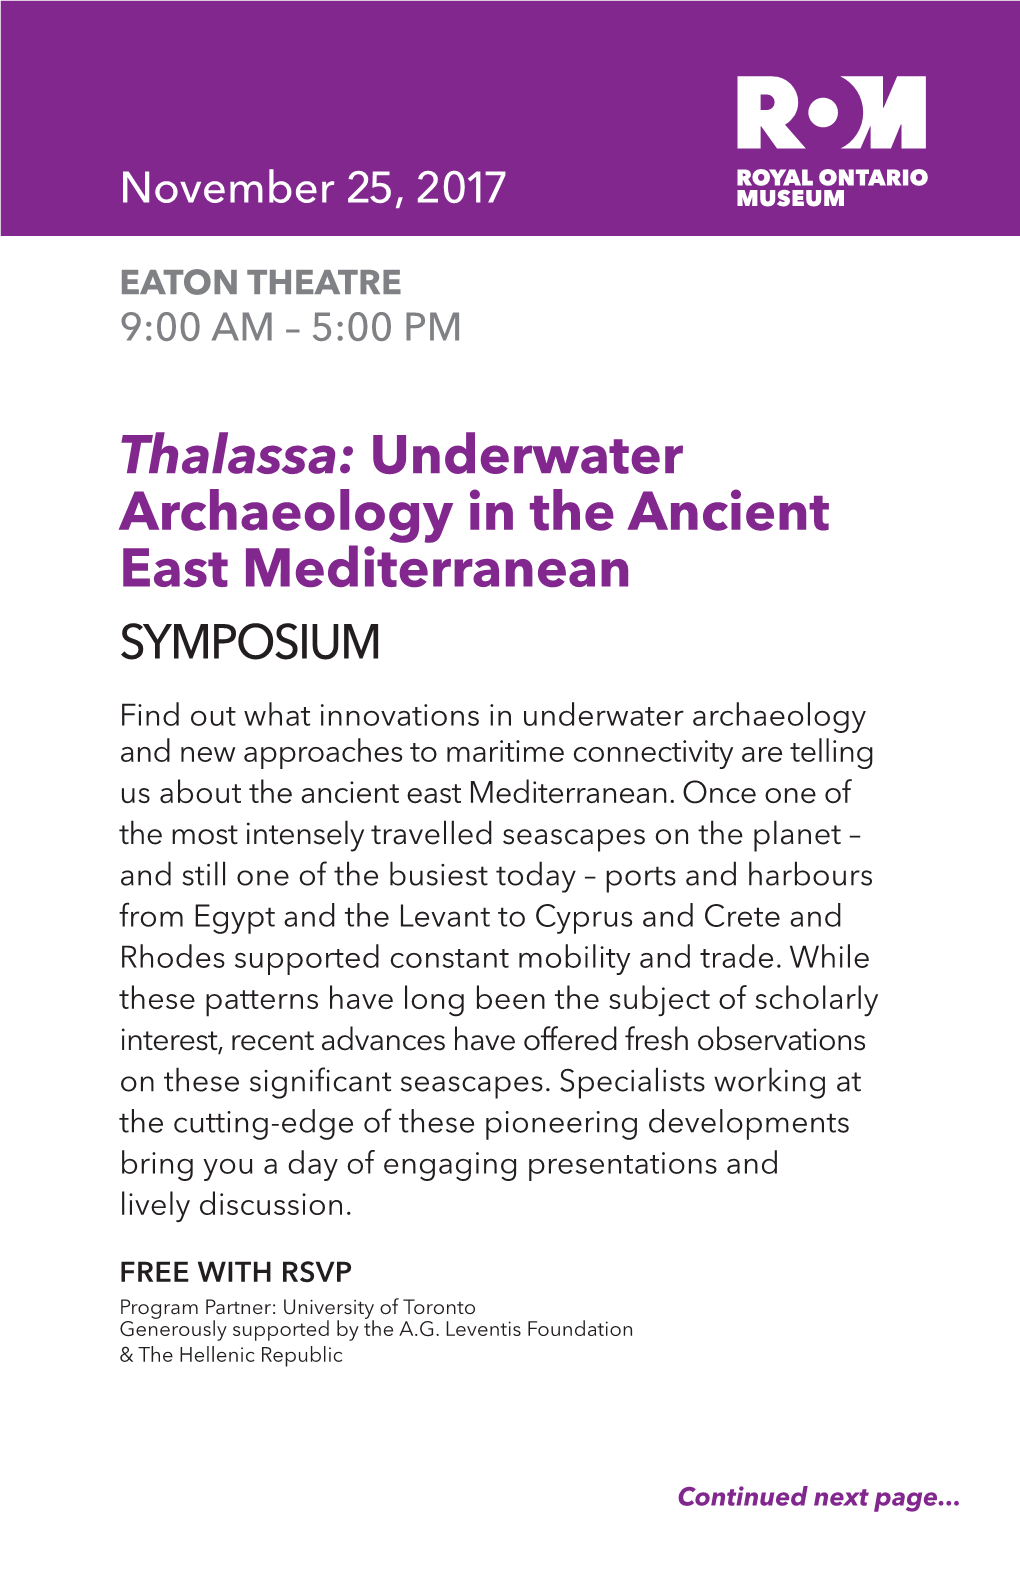 Thalassa: Underwater Archaeology in the Ancient East Mediterranean SYMPOSIUM